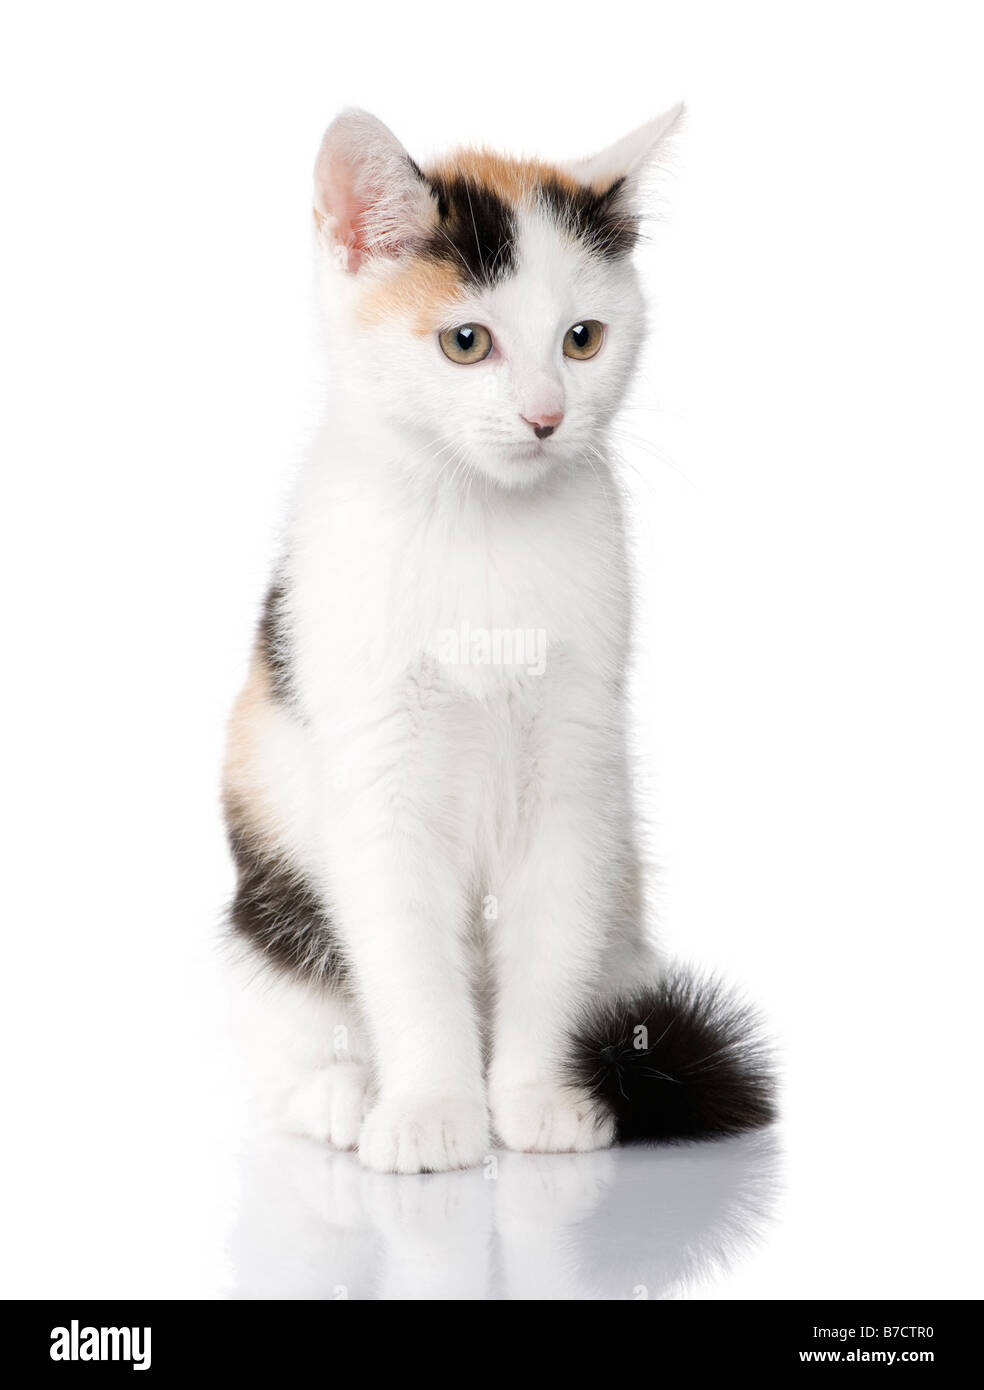 Gatito Shorthair Europeo cat 2 meses delante de un fondo blanco. Foto de stock